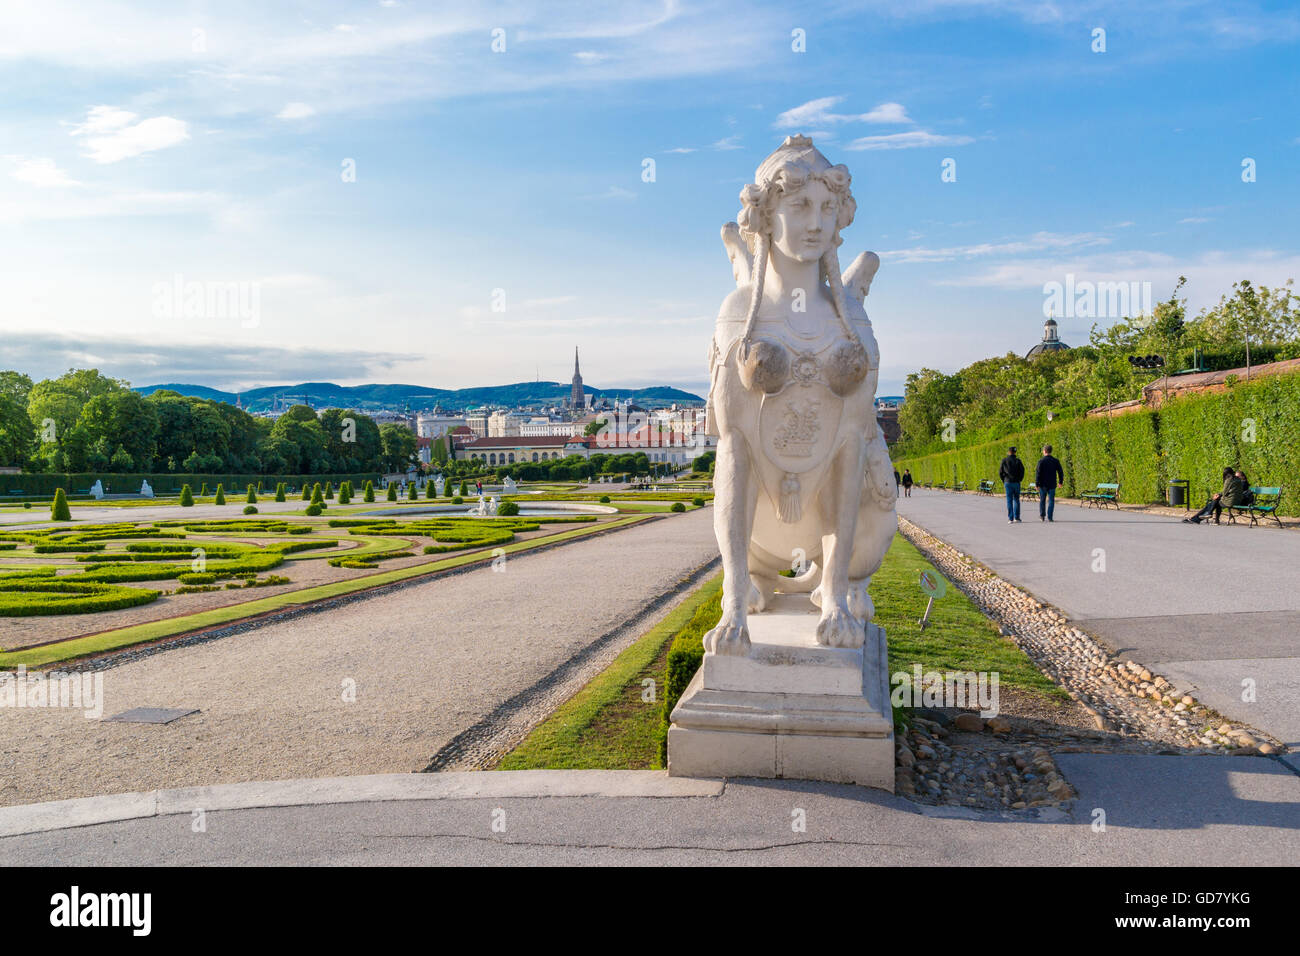 Sphinx sculpture and people in Belvedere Gardens in Vienna, Austria Stock Photo